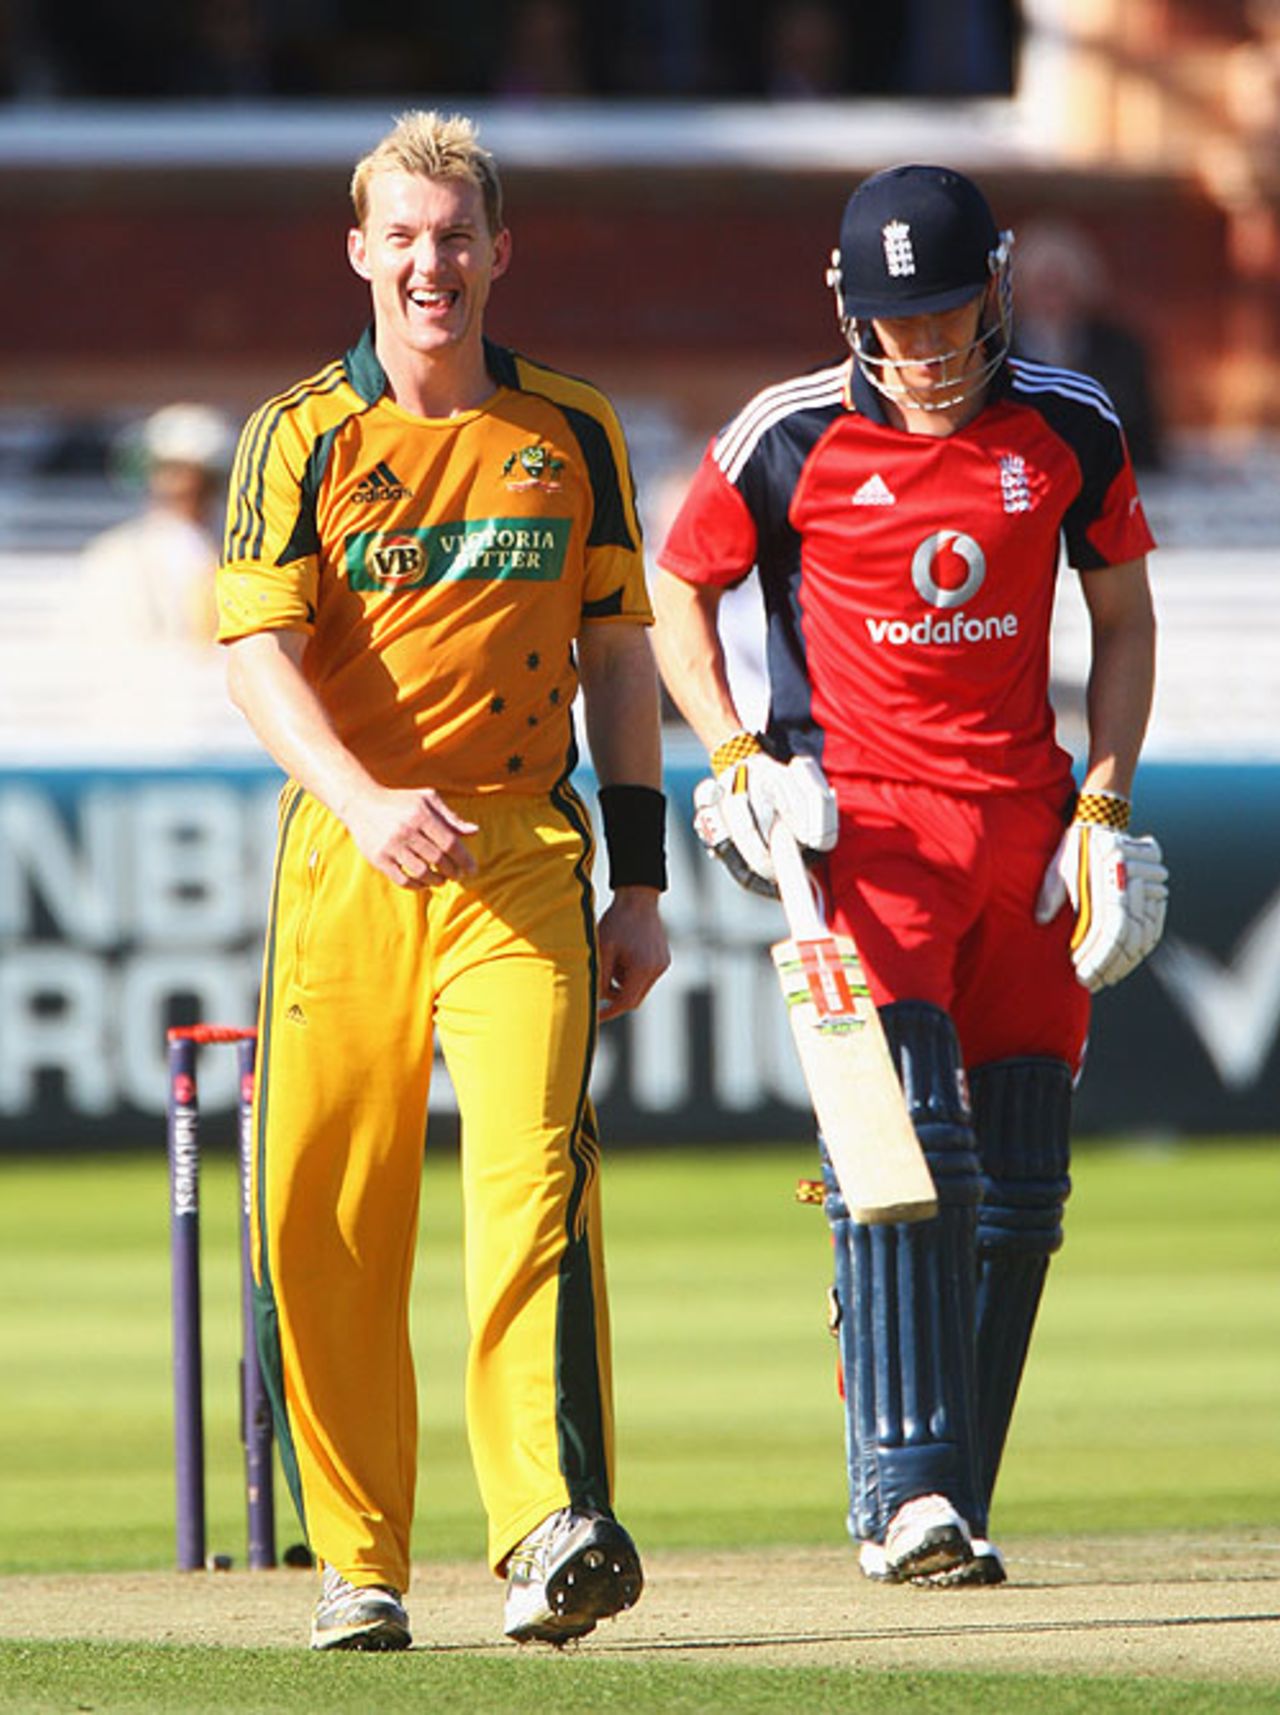 Brett Lee claimed the early wicket of Joe Denly, England v Australia, 4th ODI, Lord's, September 12, 2009